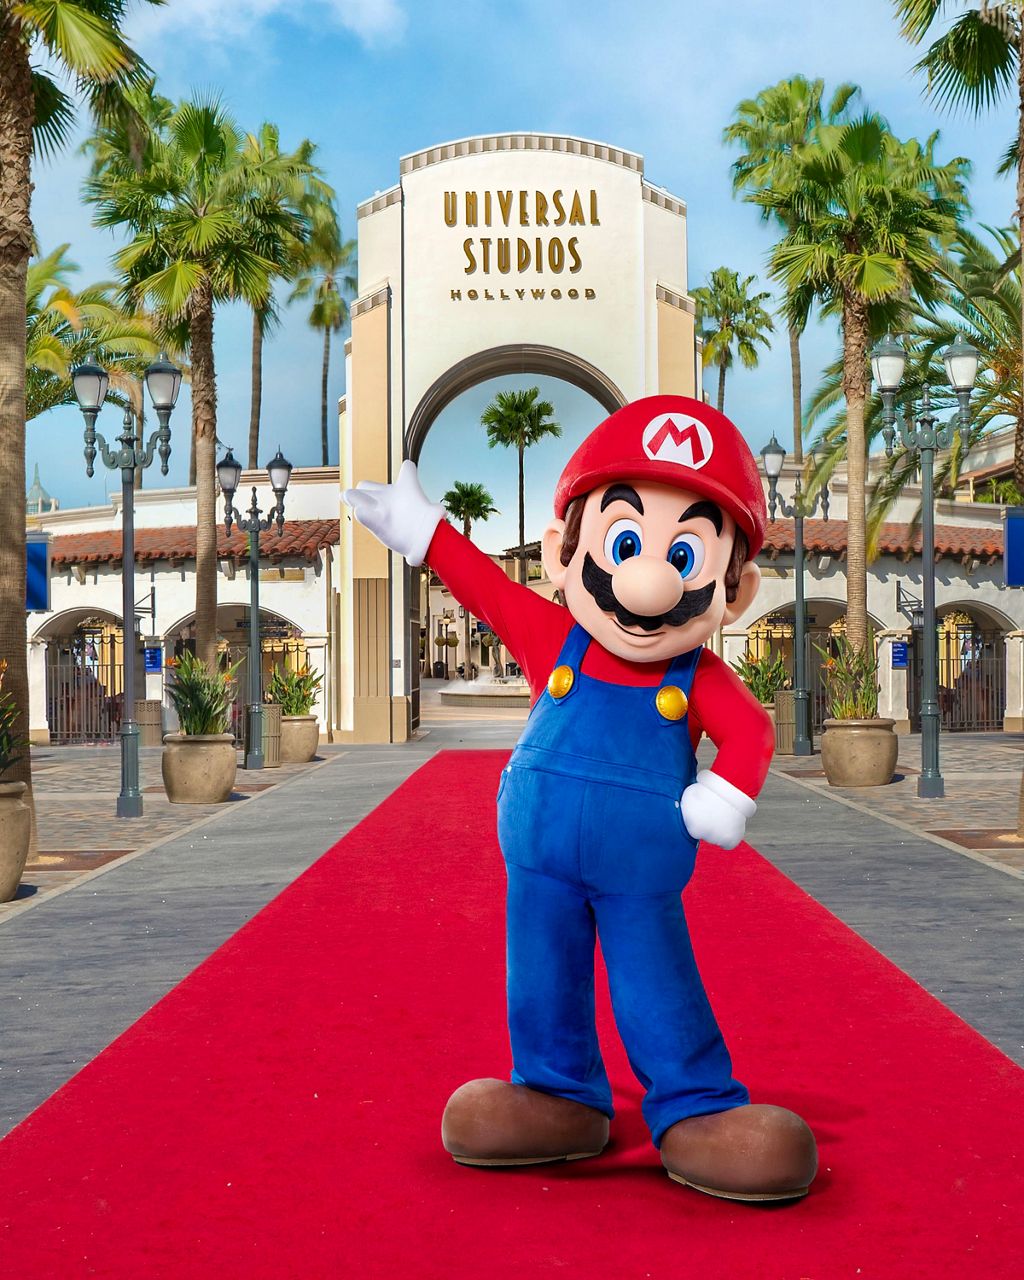 Universal Studios Hollywood unveils Mario Kart ride